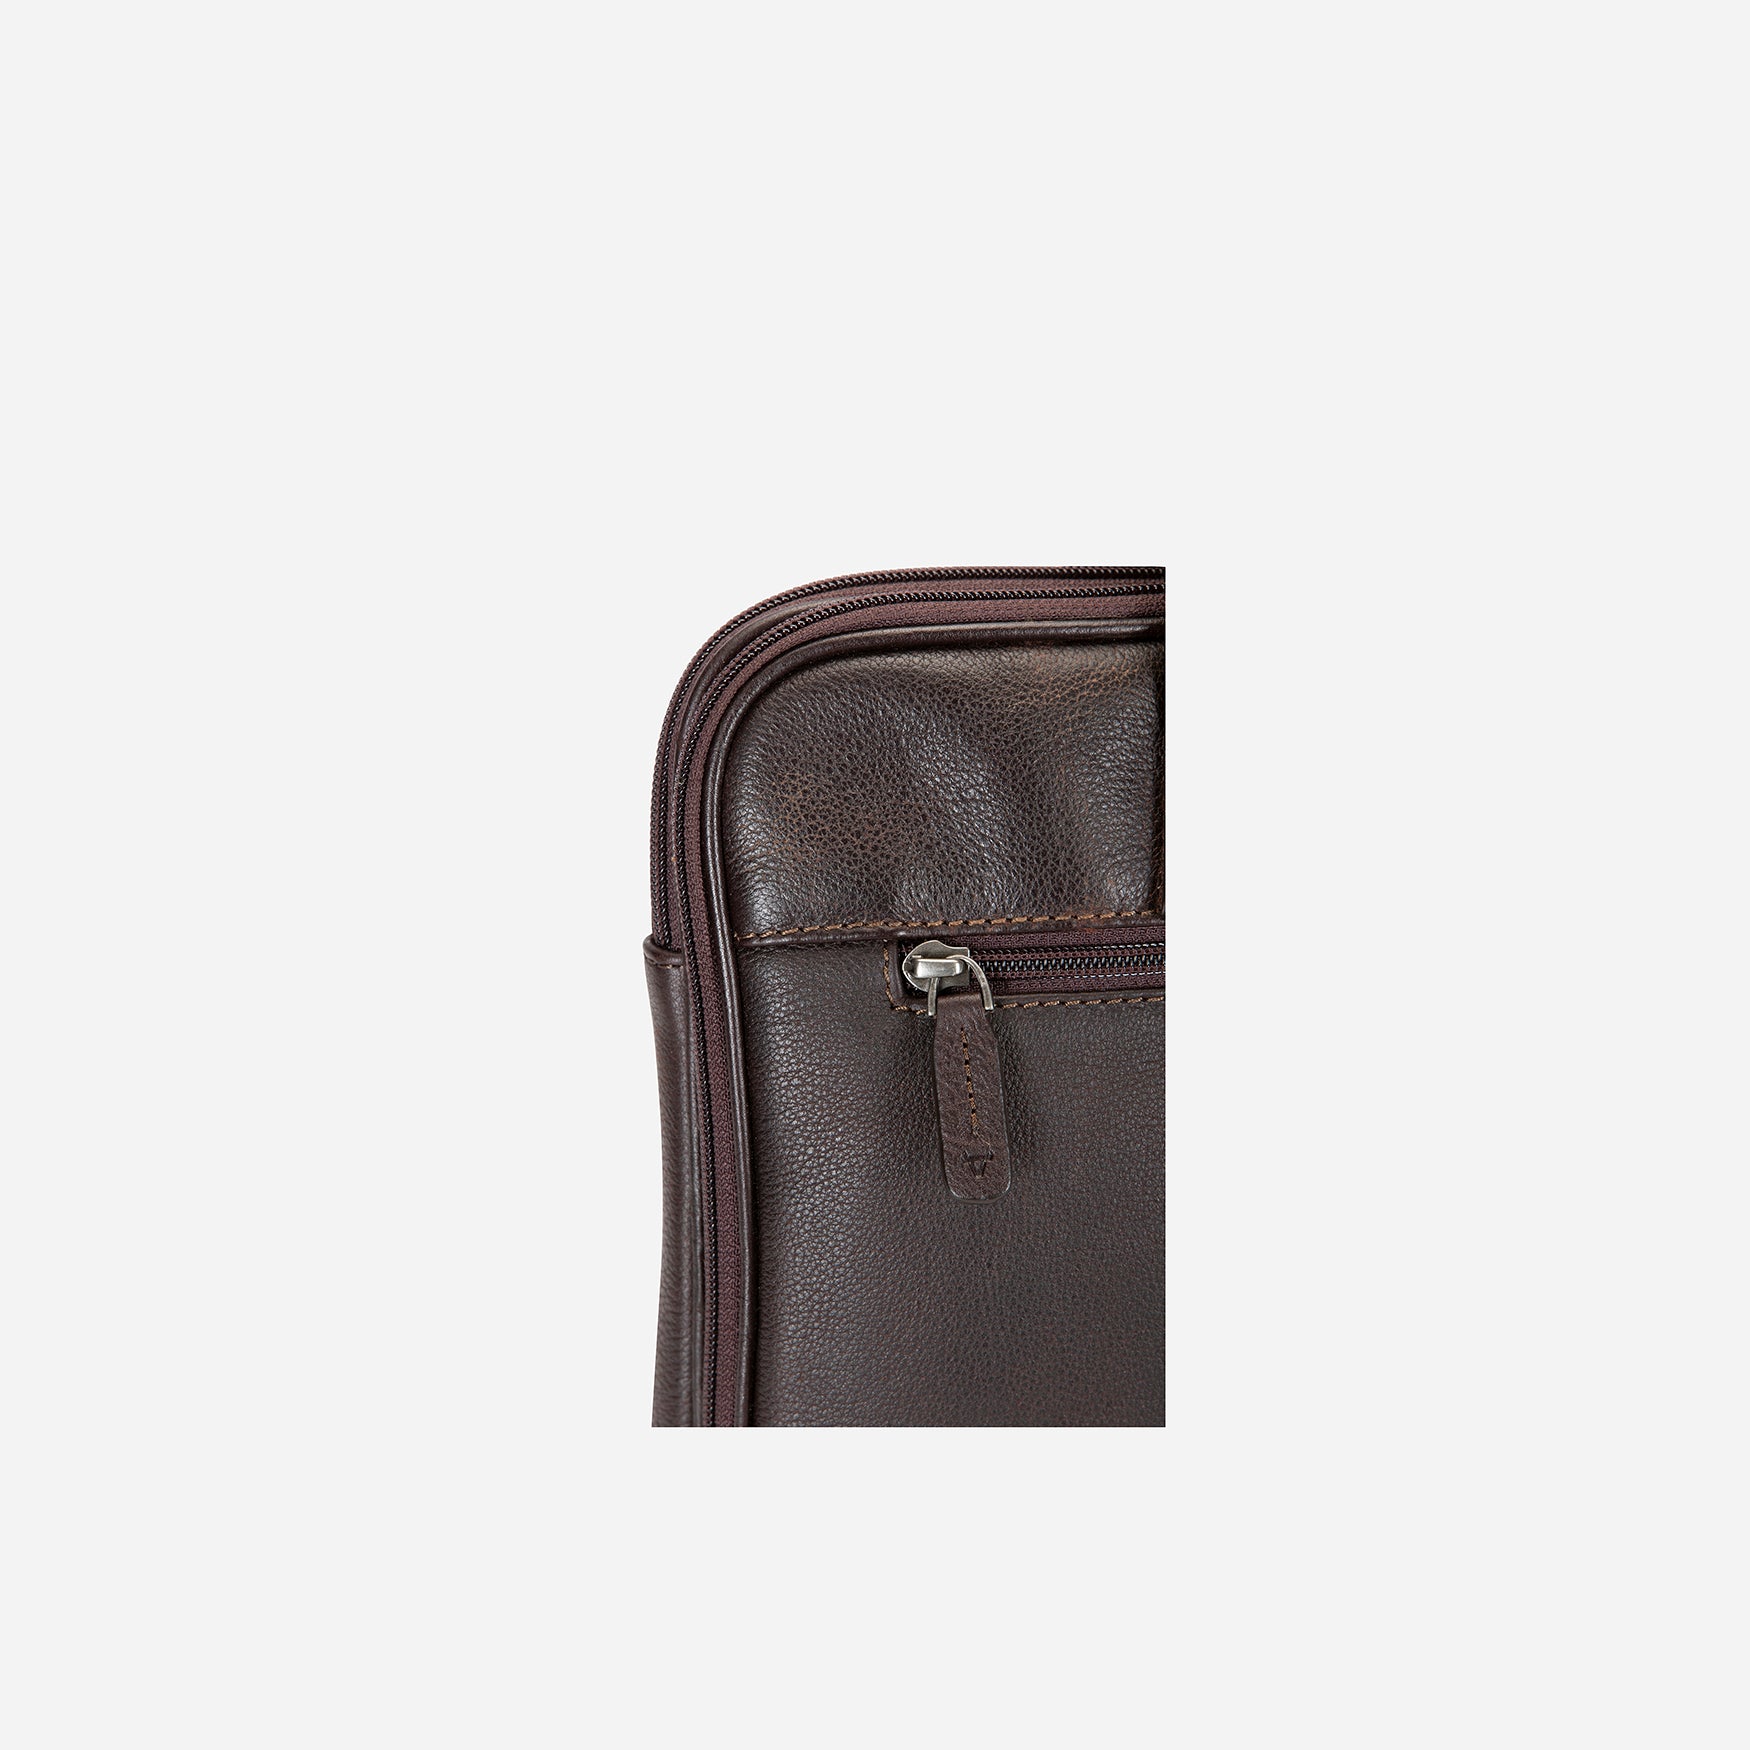 Kudu 13" Compact Leather Laptop Bag, Brown